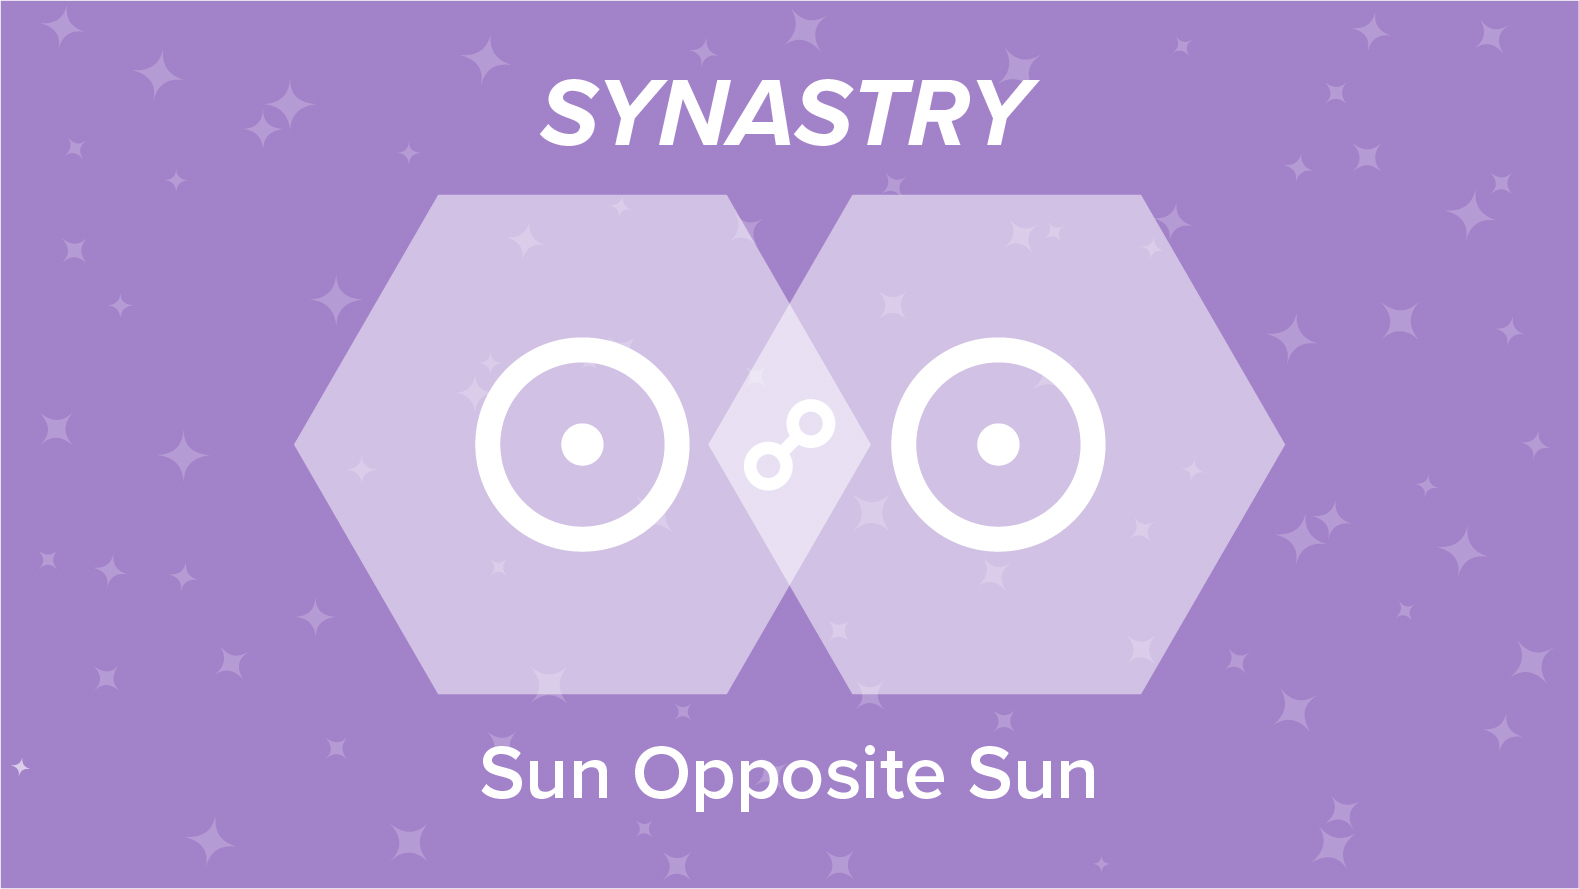 Sun Opposite Sun Synastry: Relationships and Friendships Explained